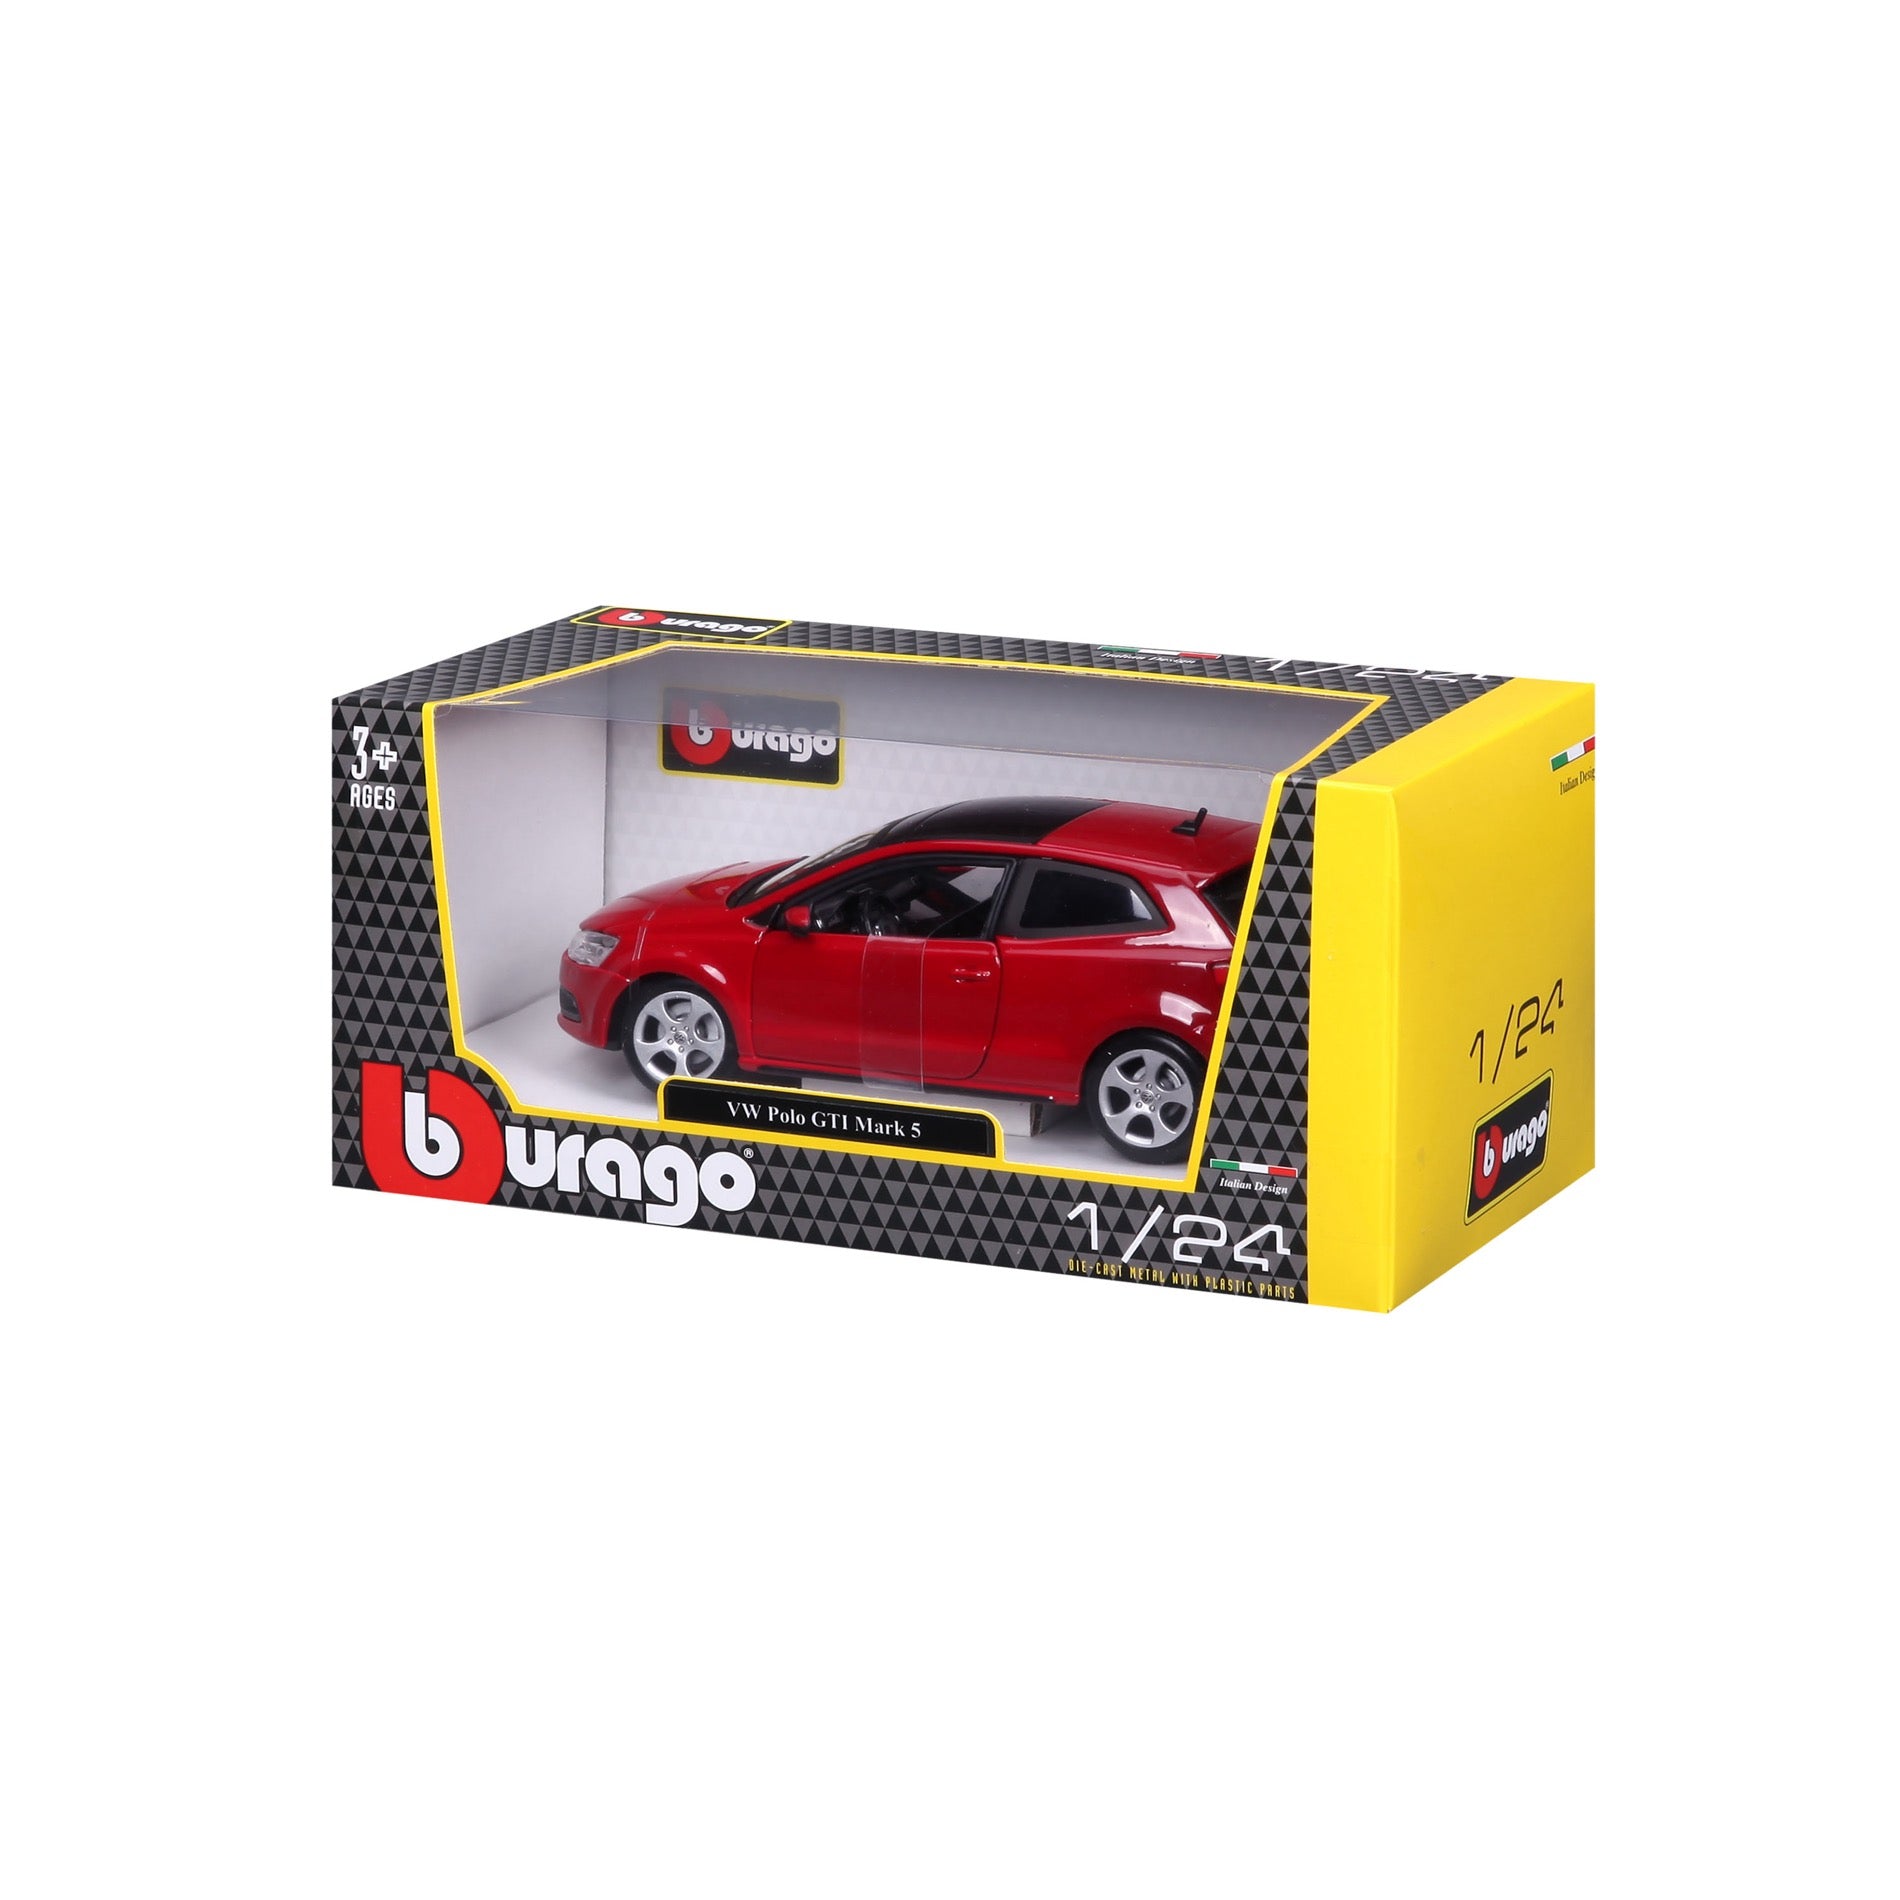 18-21059 RD - Bburago - 1:24 - VW Polo GTI Mark 5 - Rossa